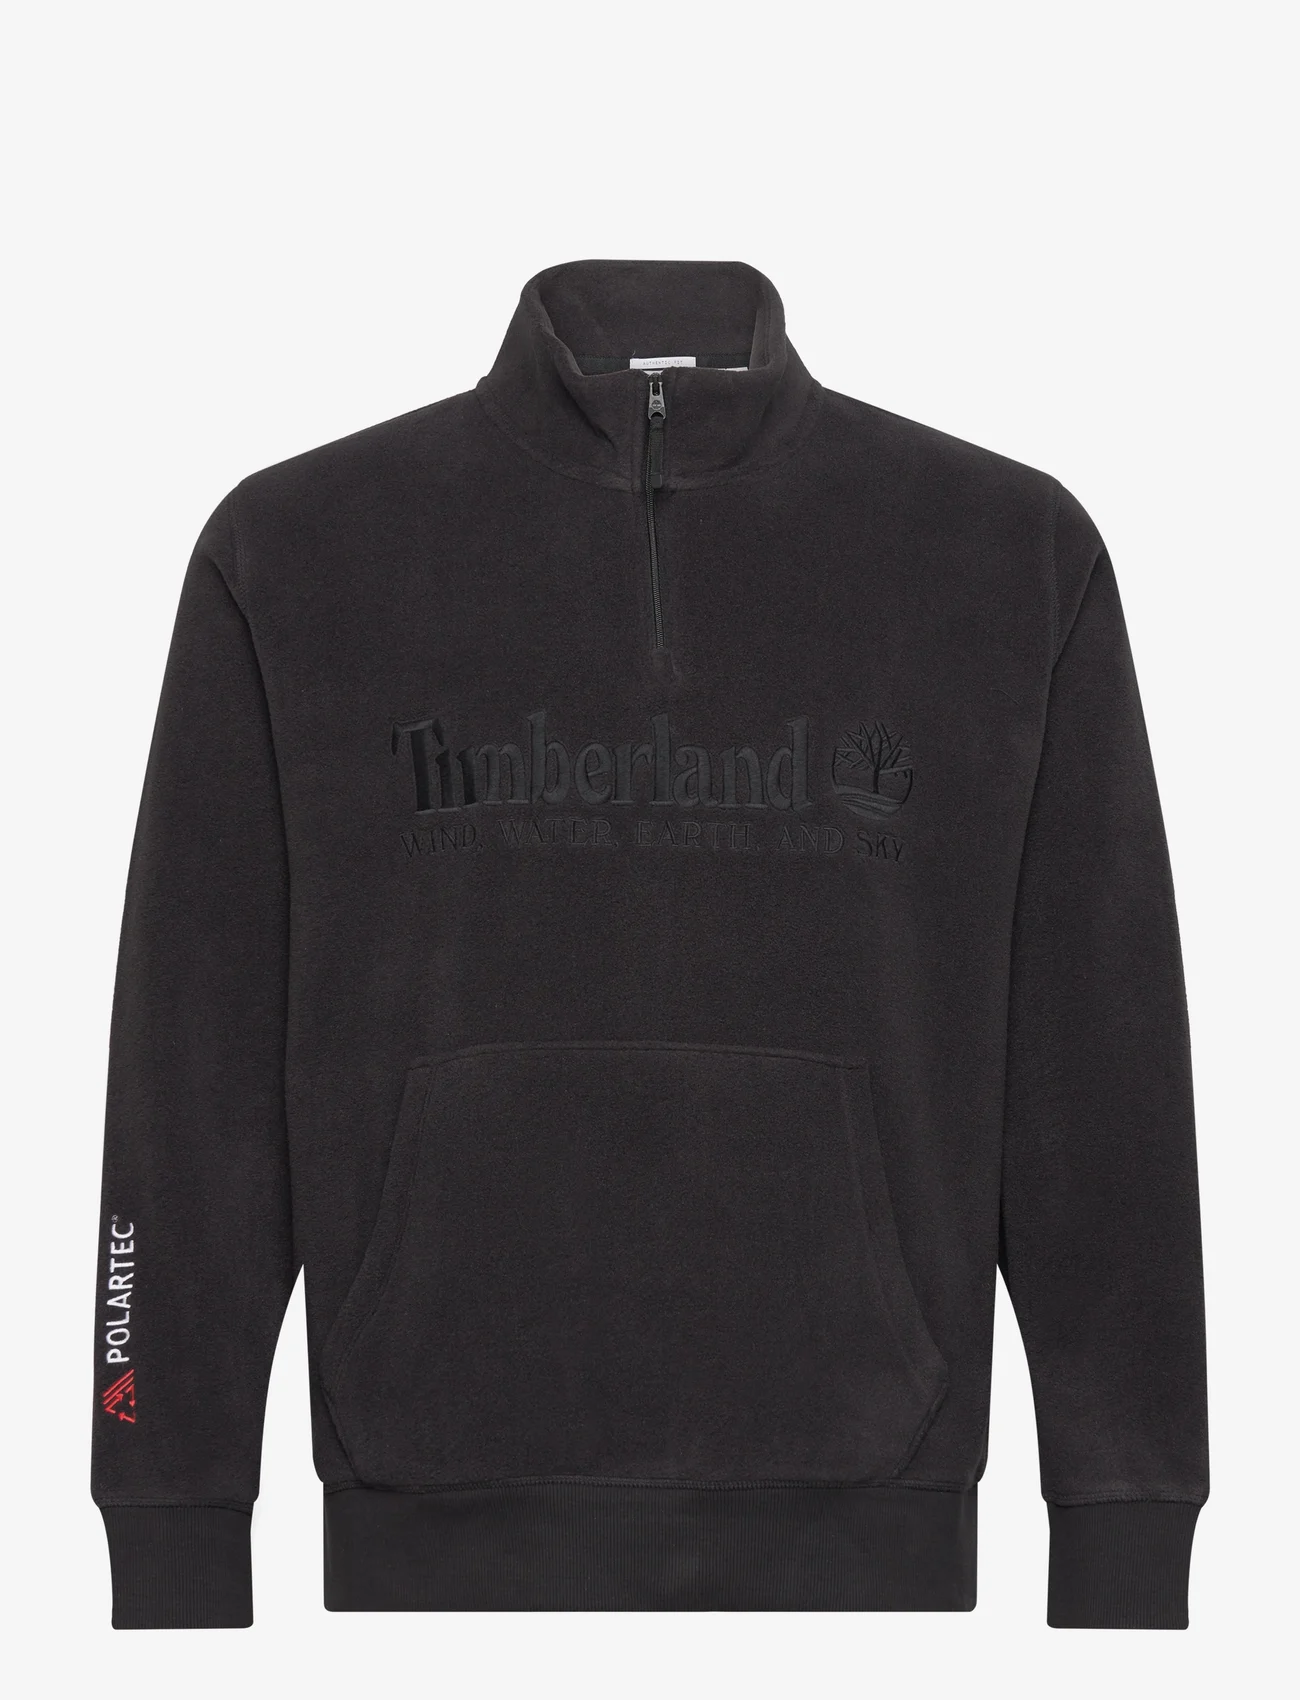 Timberland - Polartec 1/4 Sweatsh - mid layer jackets - black - 0